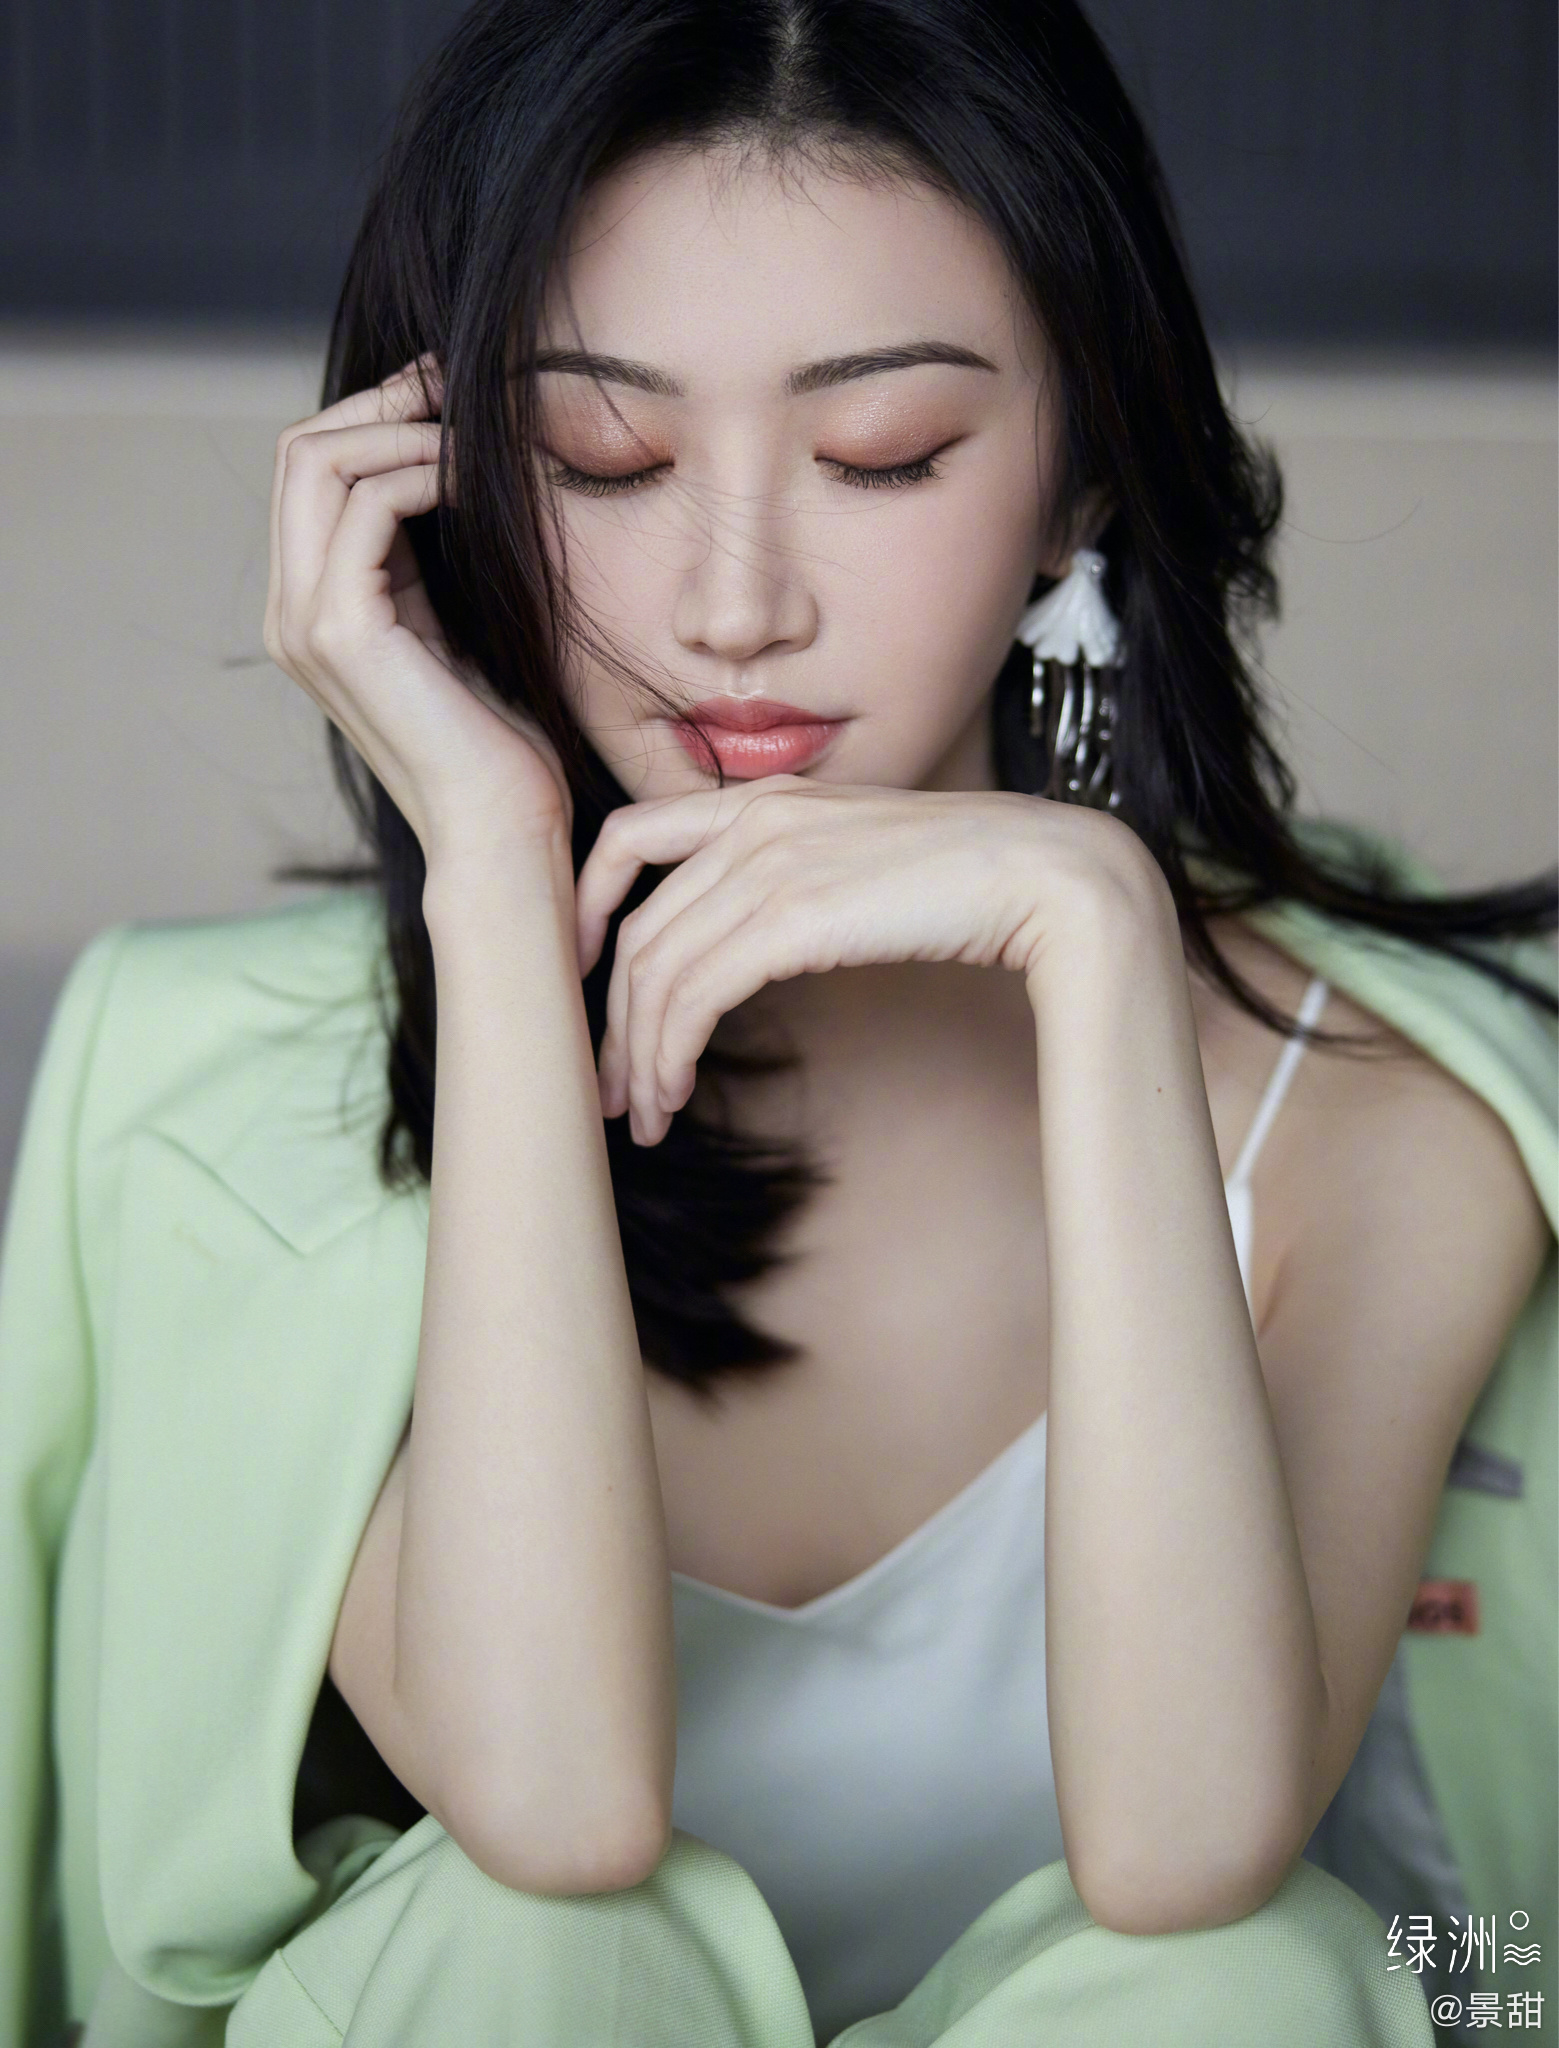 China Entertainment News: Jing Tian poses for photo shoot